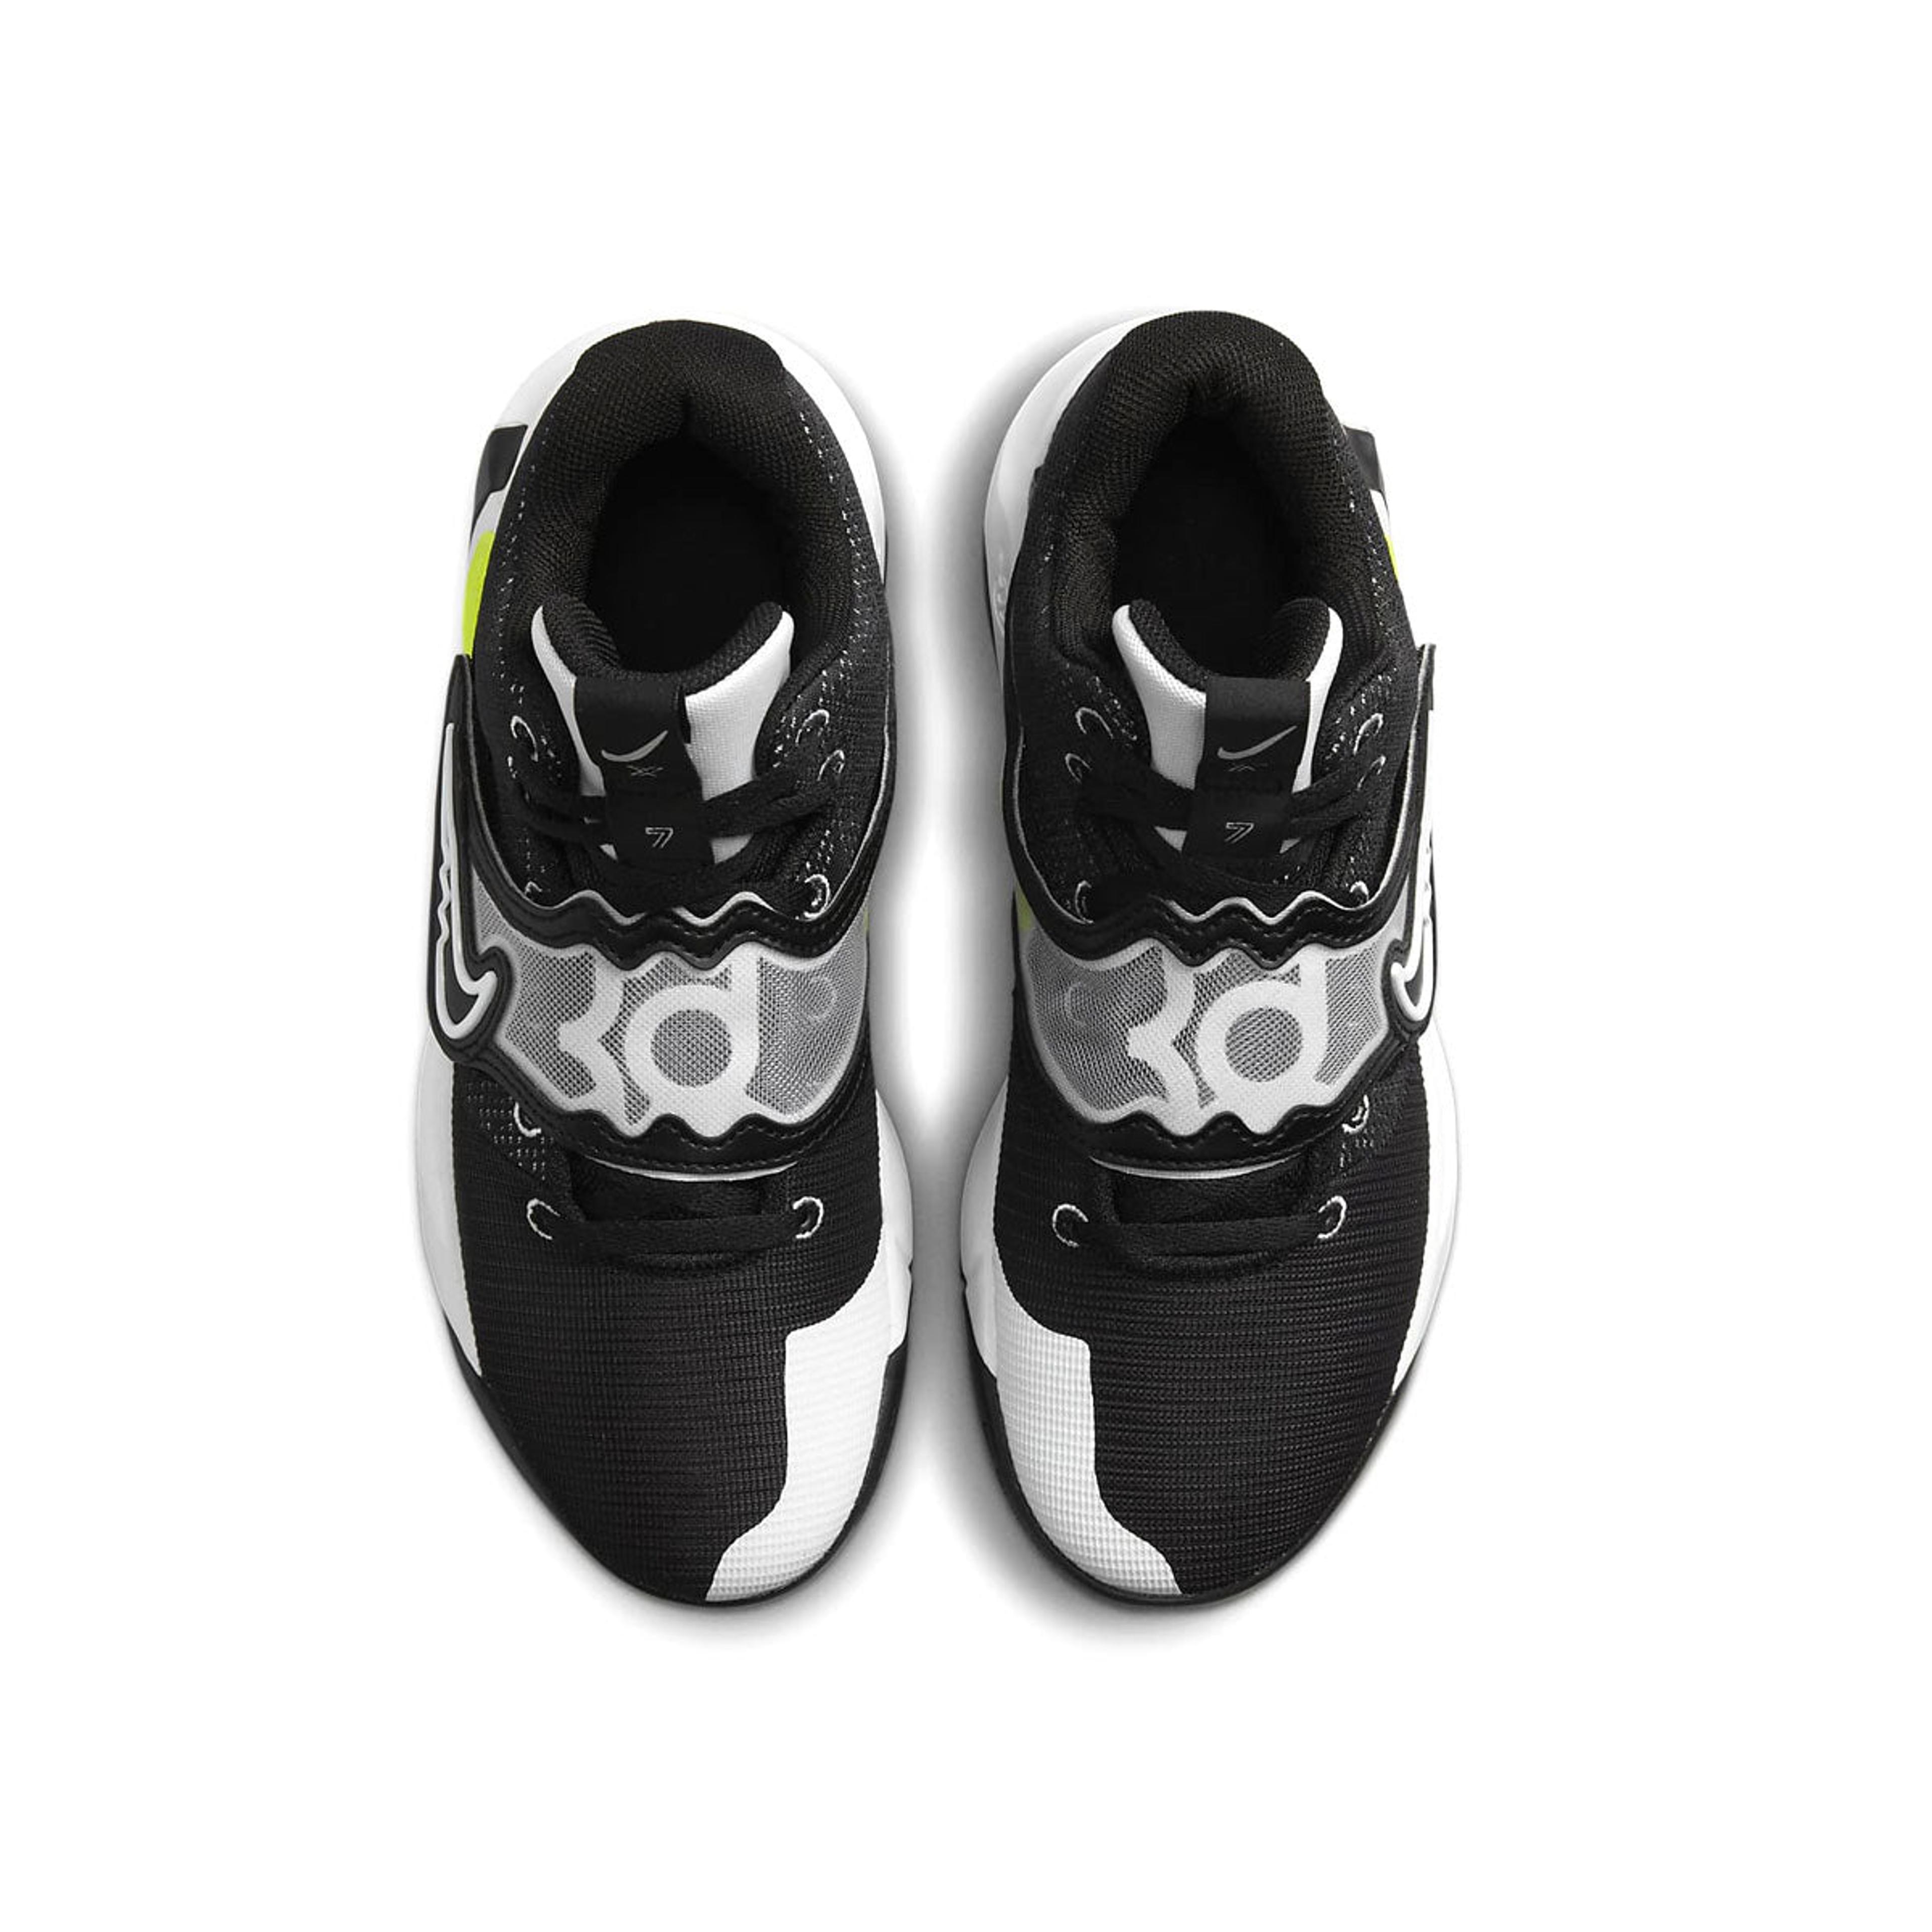 Alternate View 3 of Nike Men's KD Trey 5 X Black Volt White